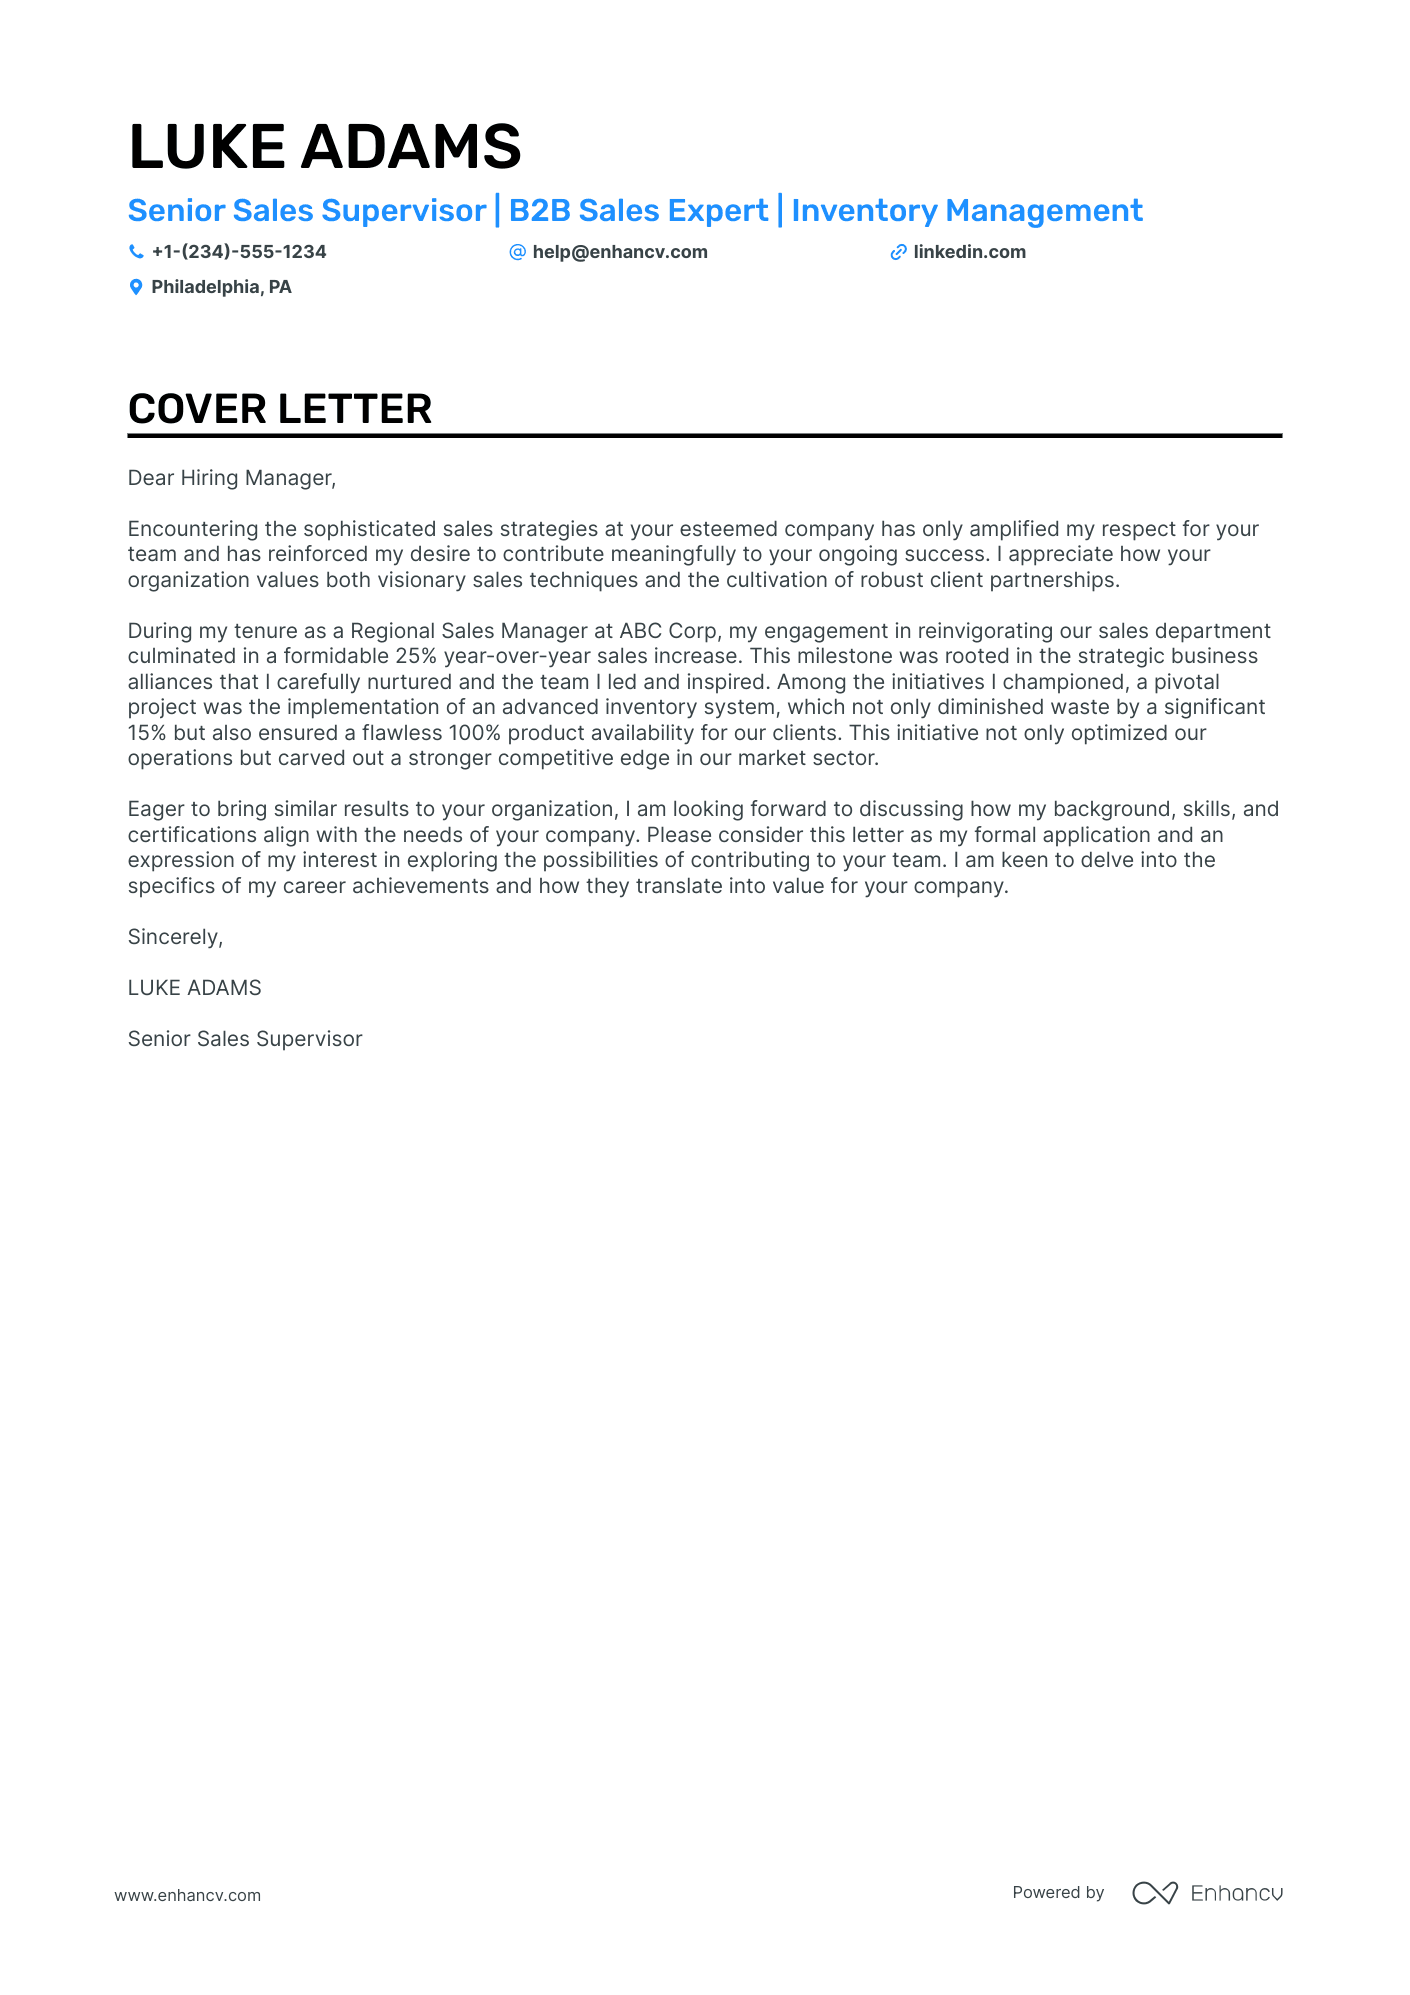 Sales Supervisor cover letter